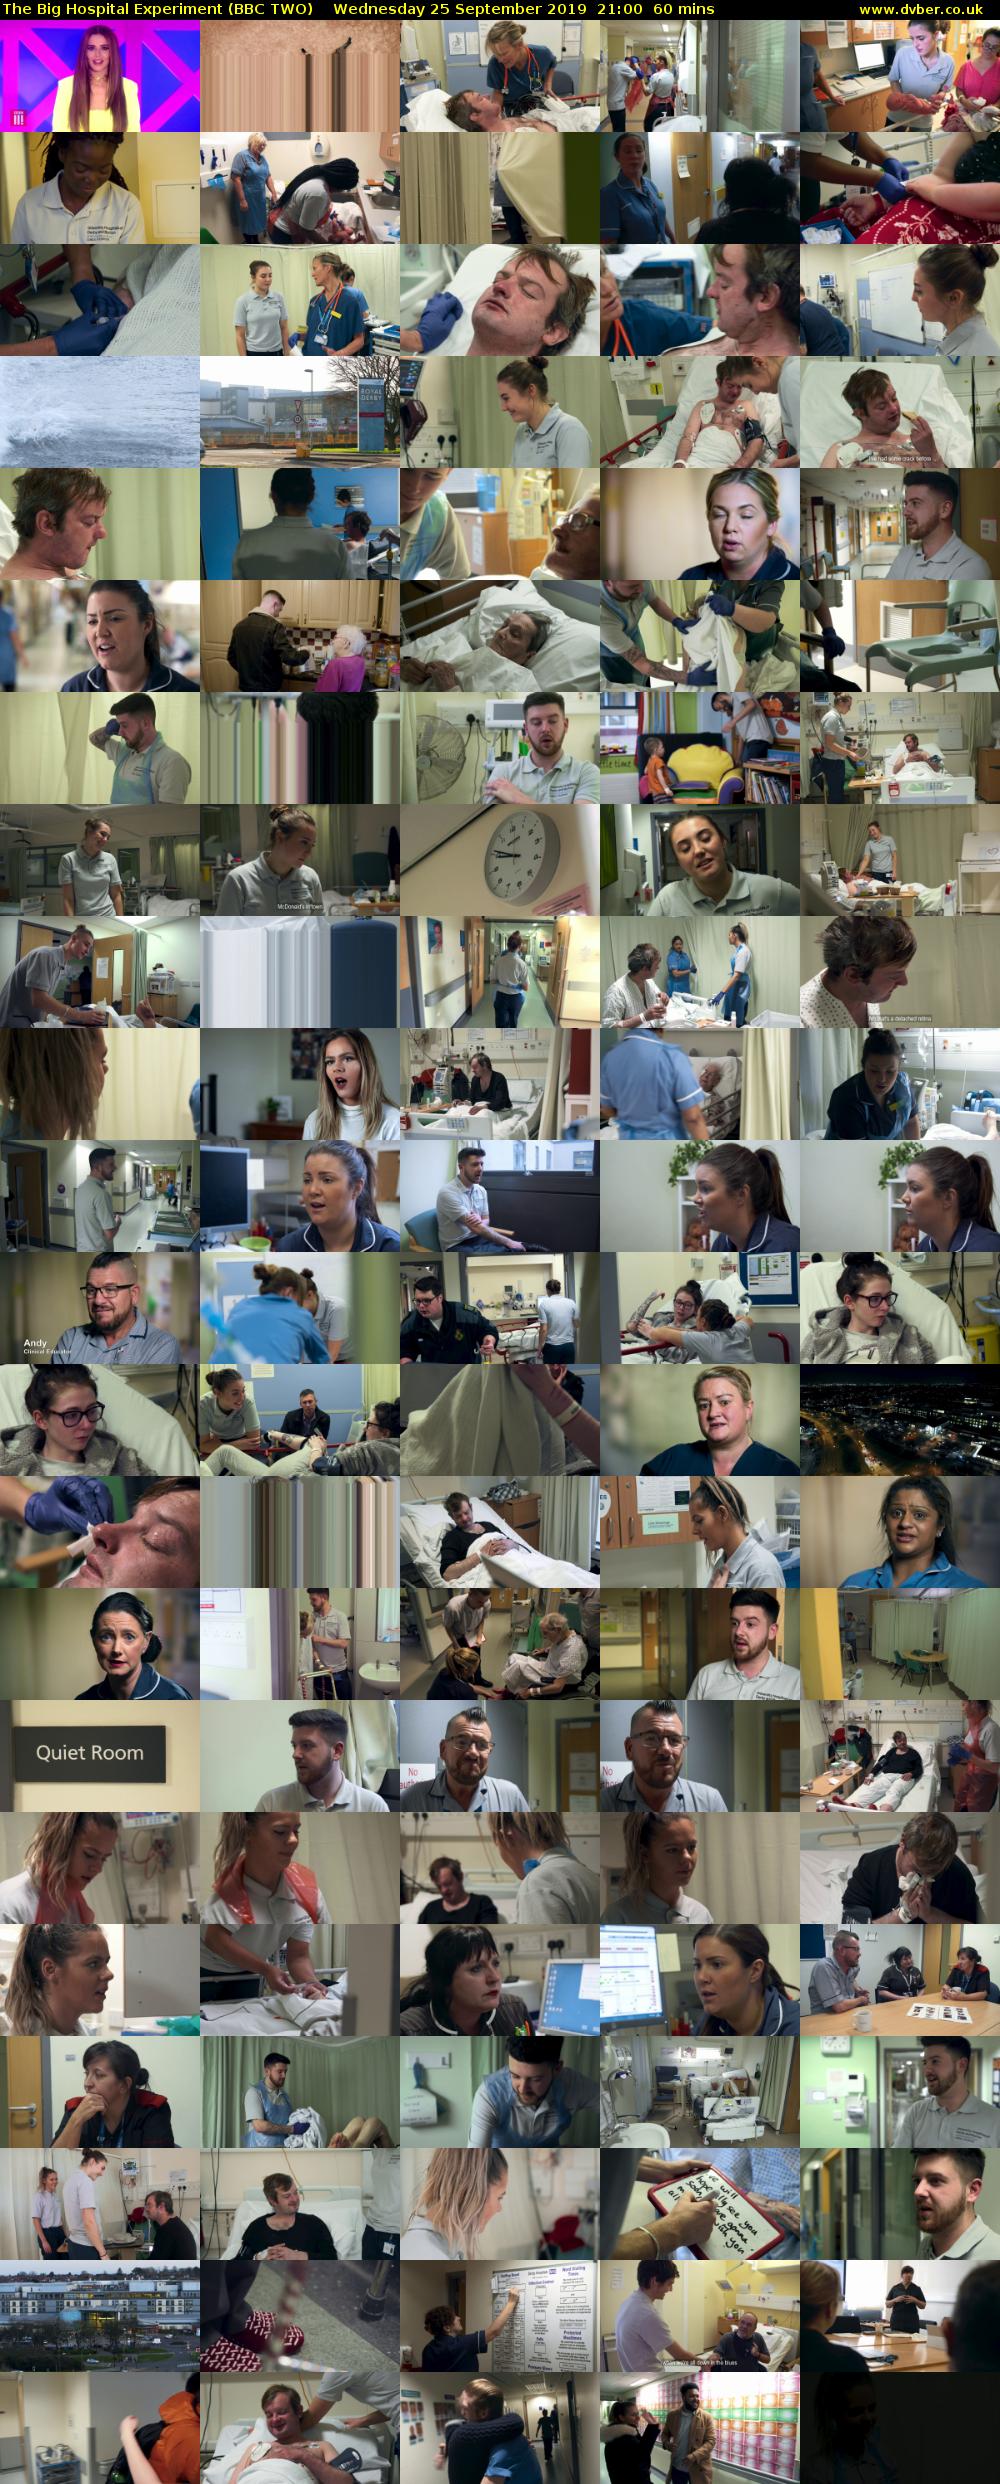 The Big Hospital Experiment (BBC TWO) Wednesday 25 September 2019 21:00 - 22:00